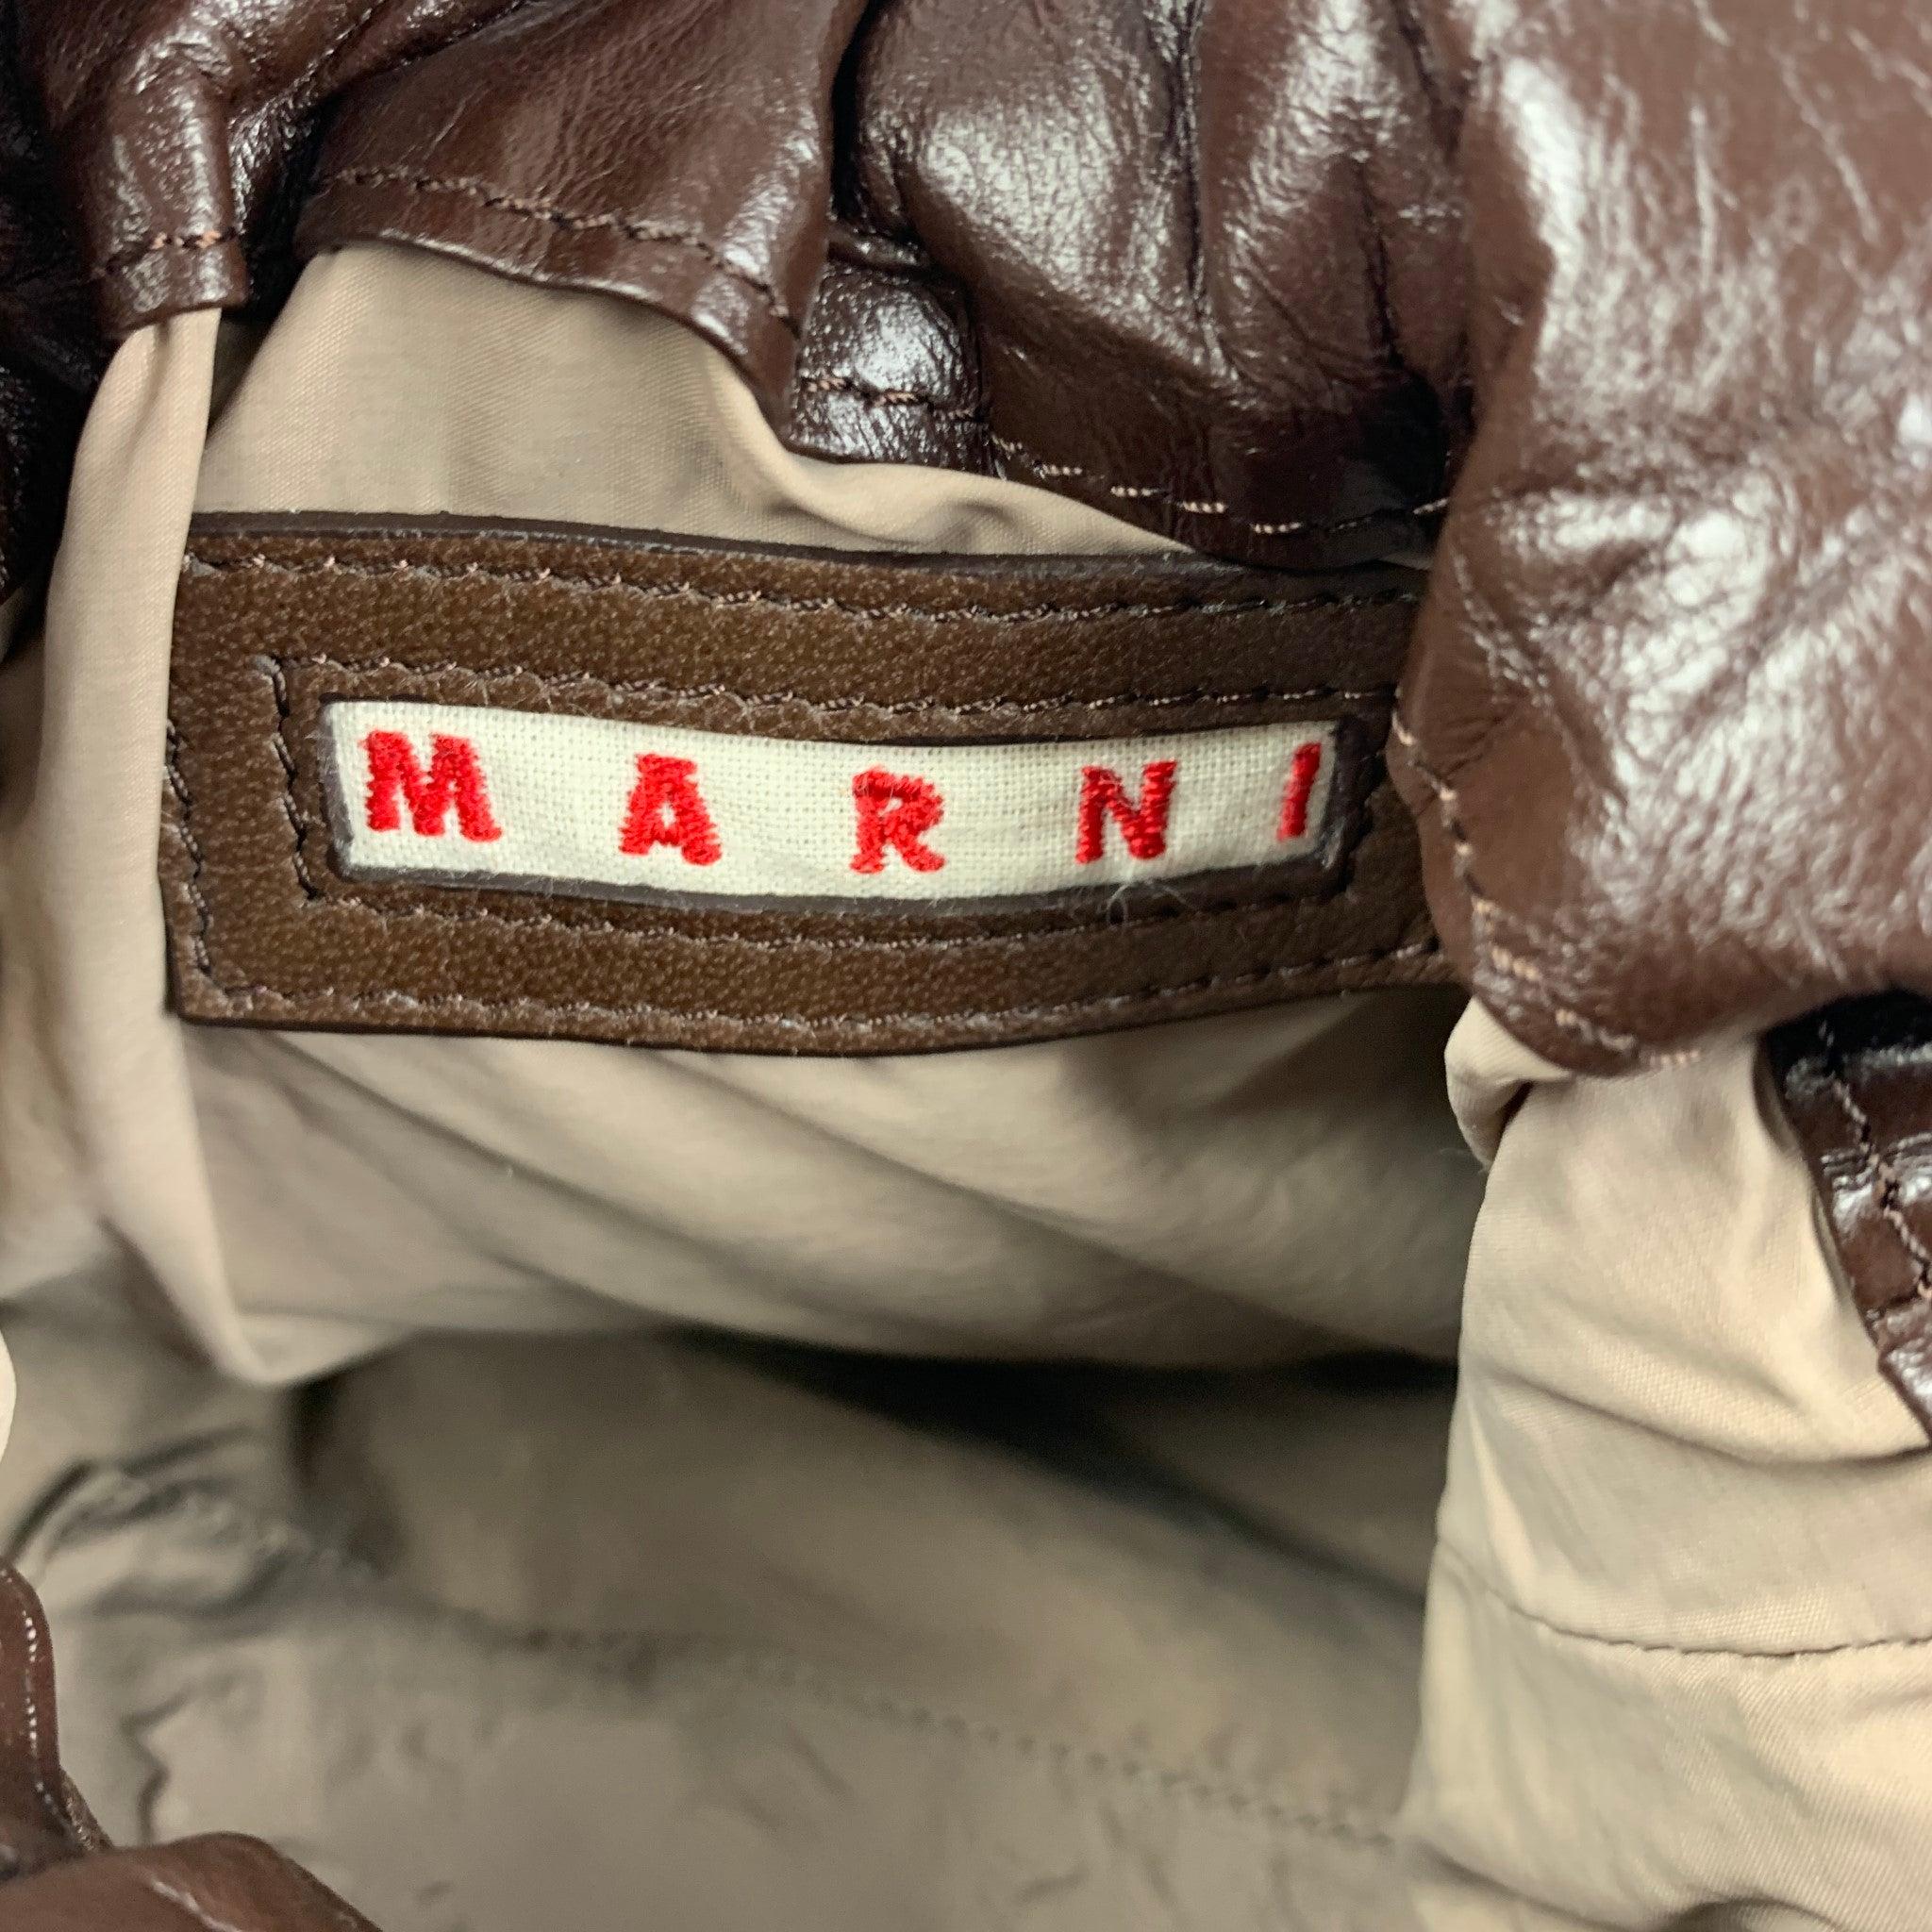 MARNI Brown Black Wrinkled Rhinestones Leather Handbag For Sale 3